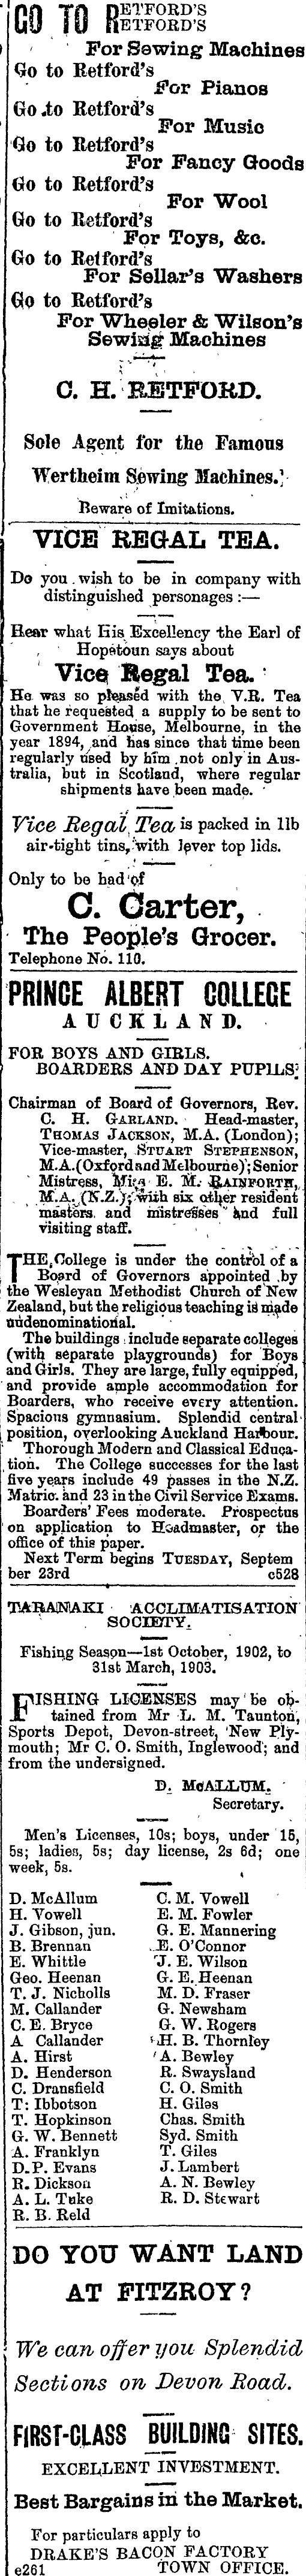 Papers Past Newspapers Taranaki Herald 30 October 1902 Page 1 Advertisements Column 4